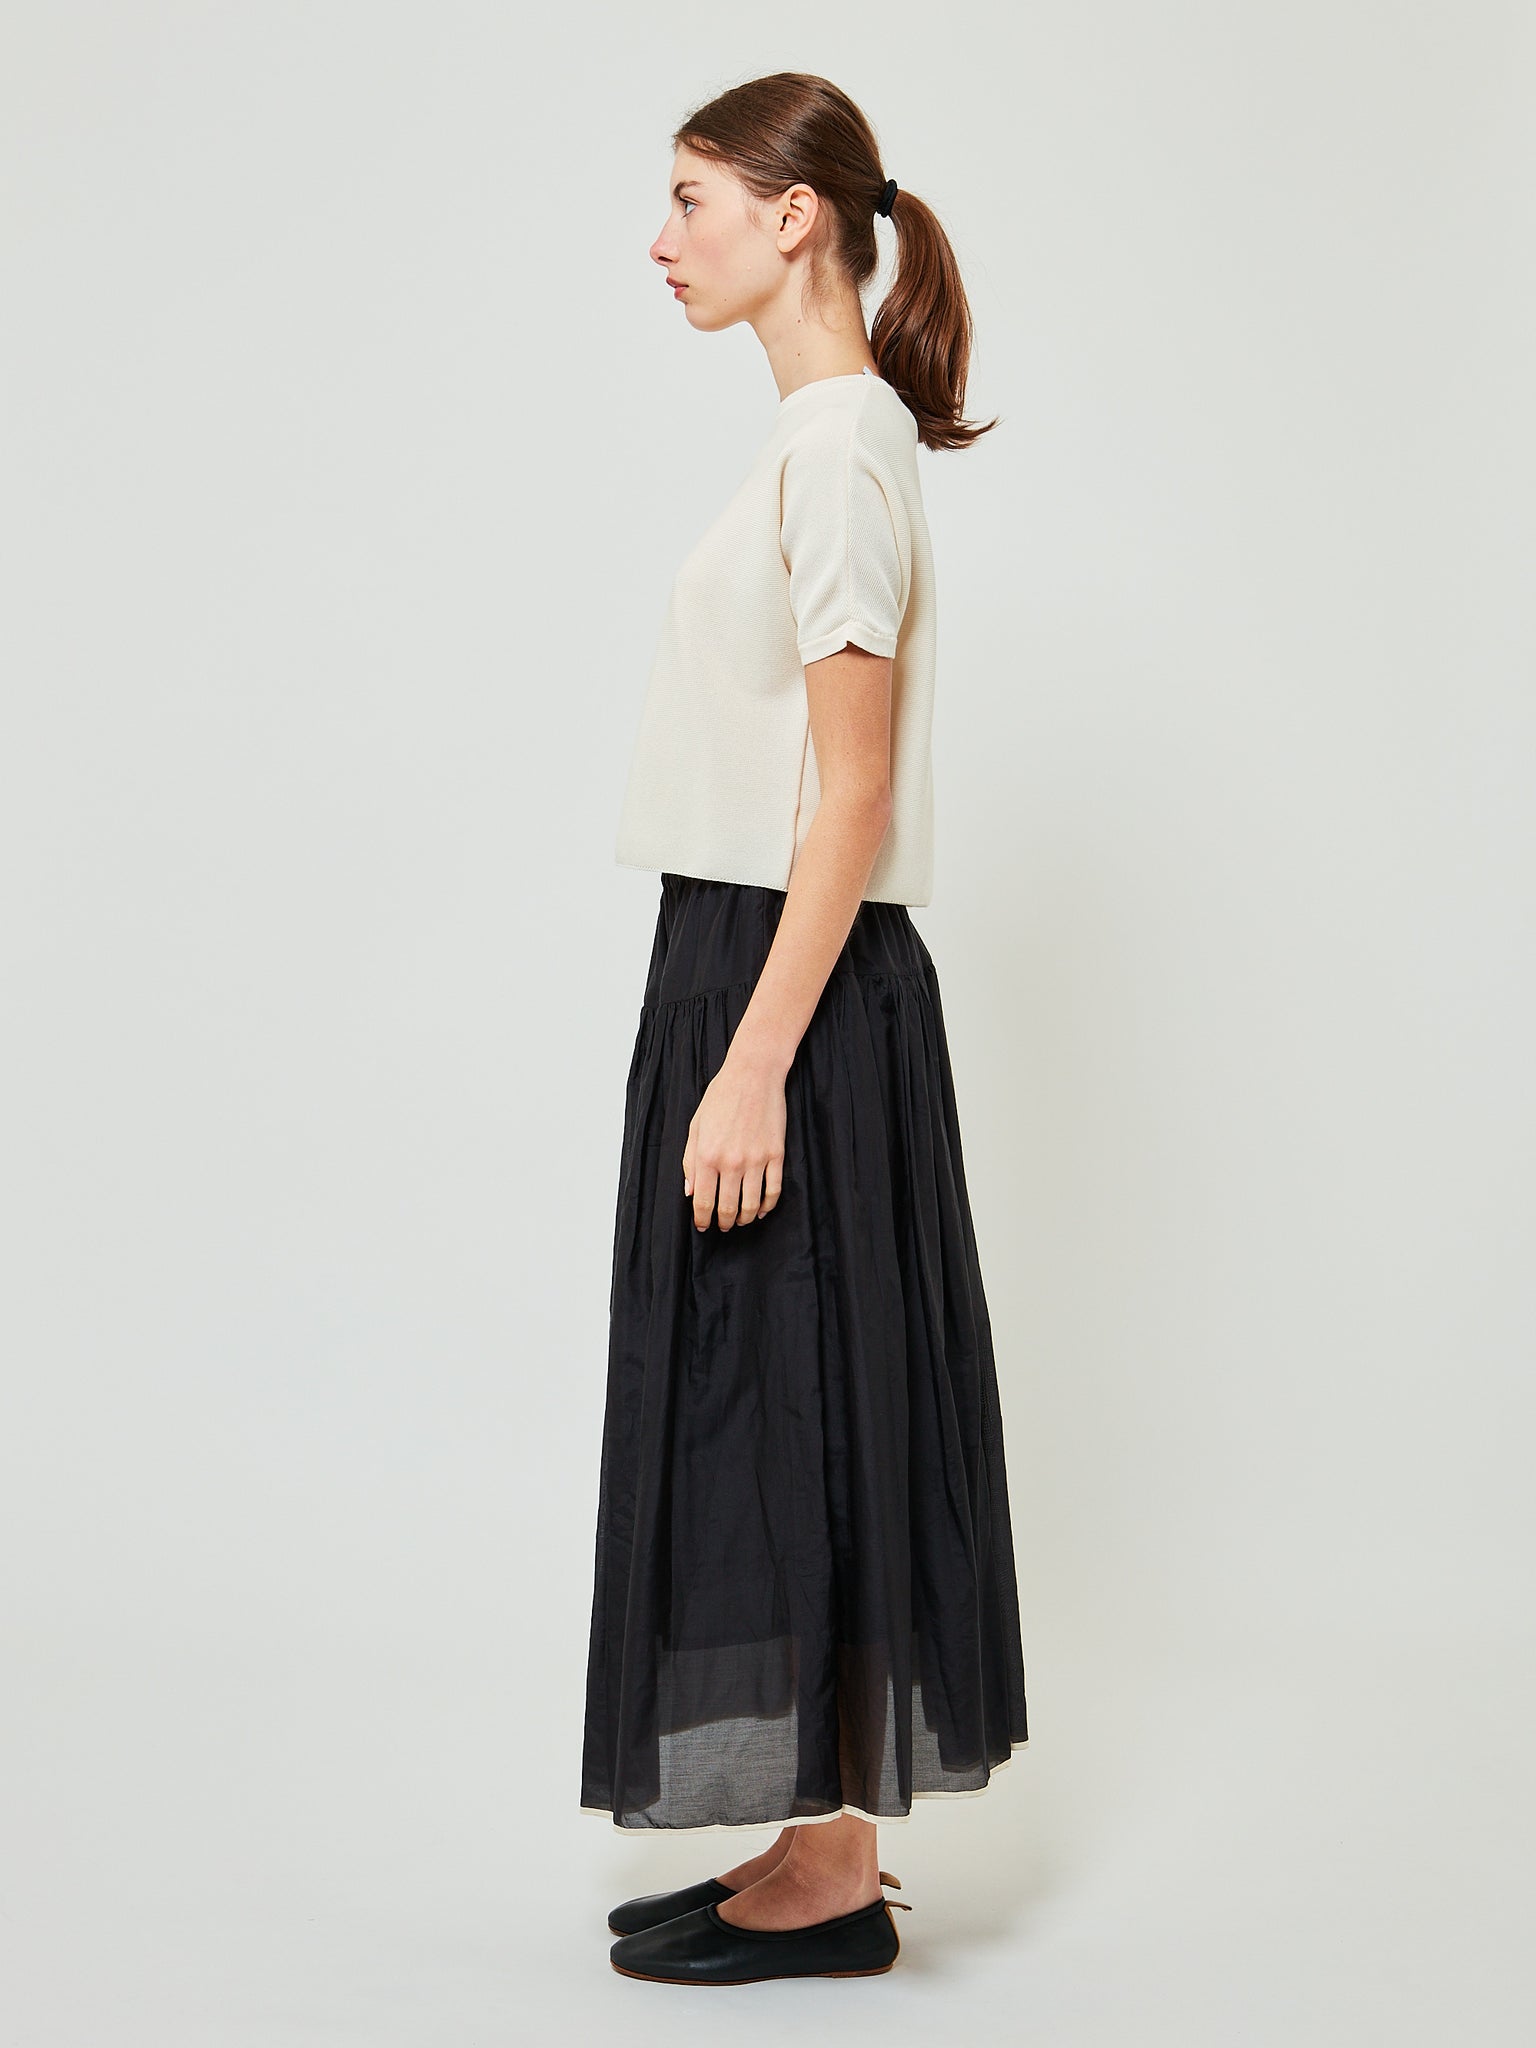 Gathered Skirt Black Cotton Silk